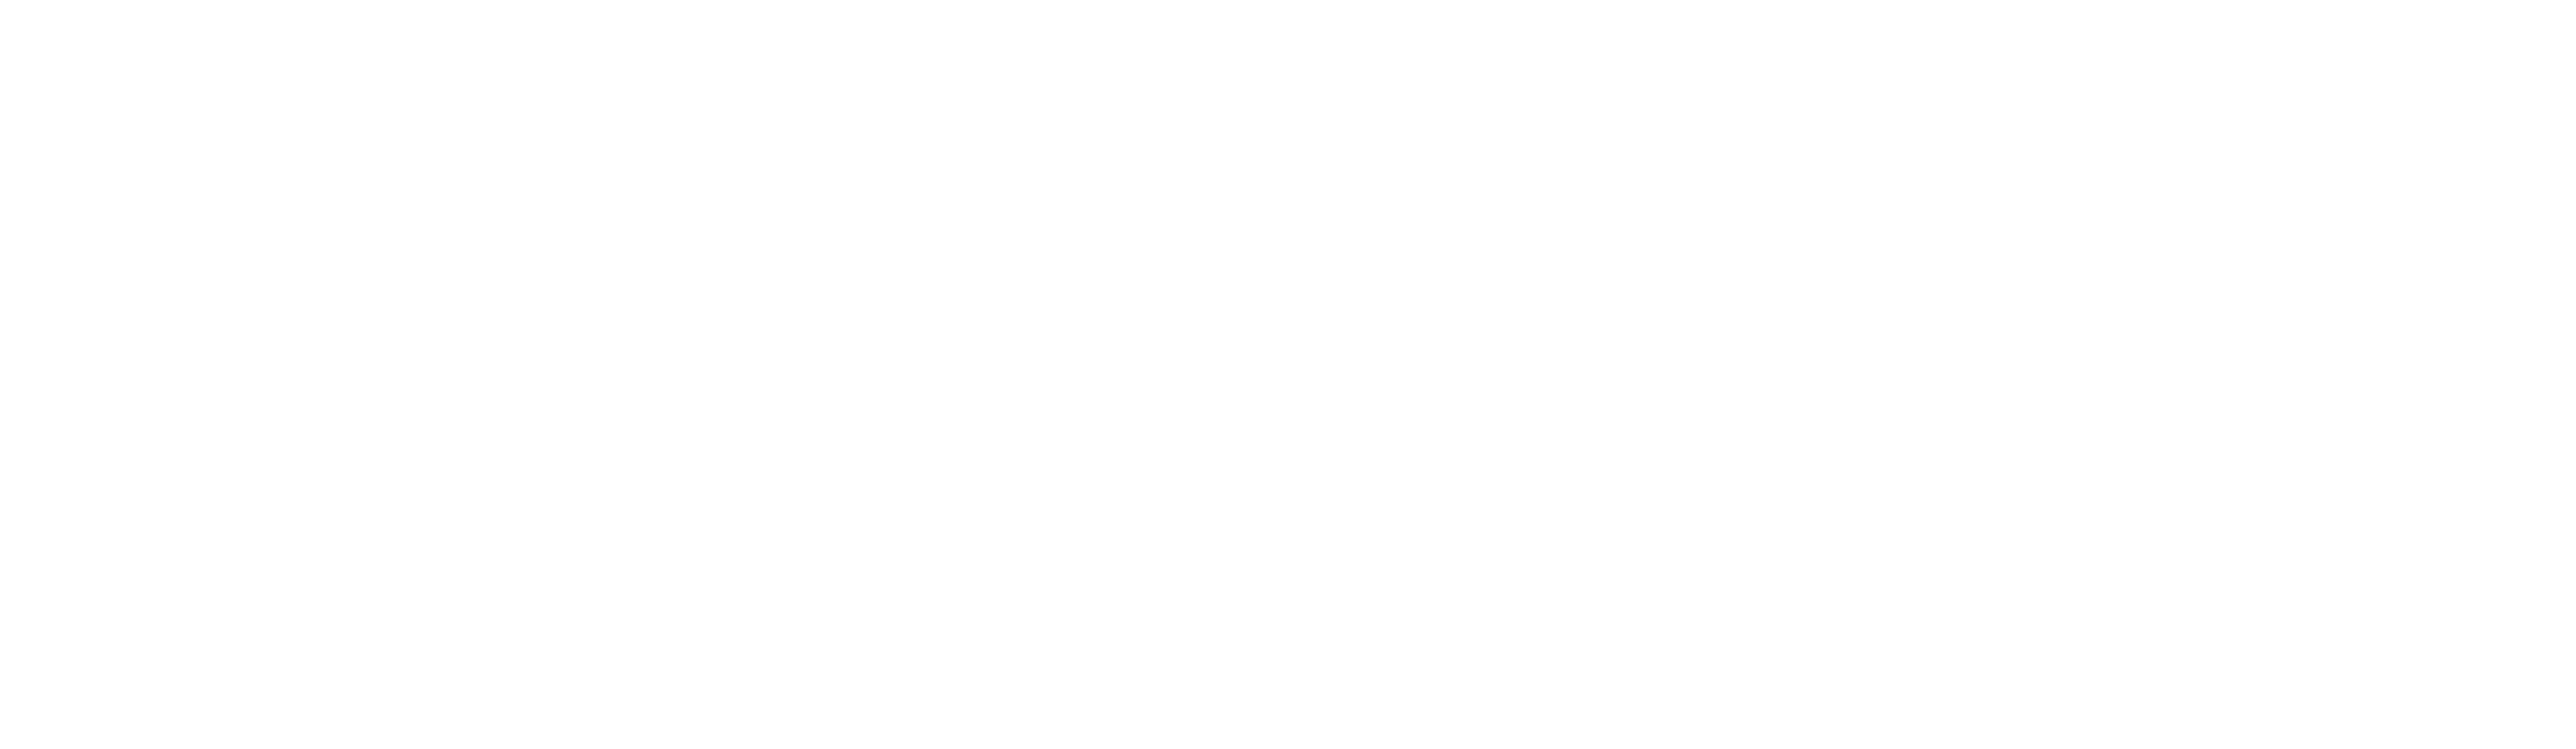 Gypaetus – Code Agency Logo